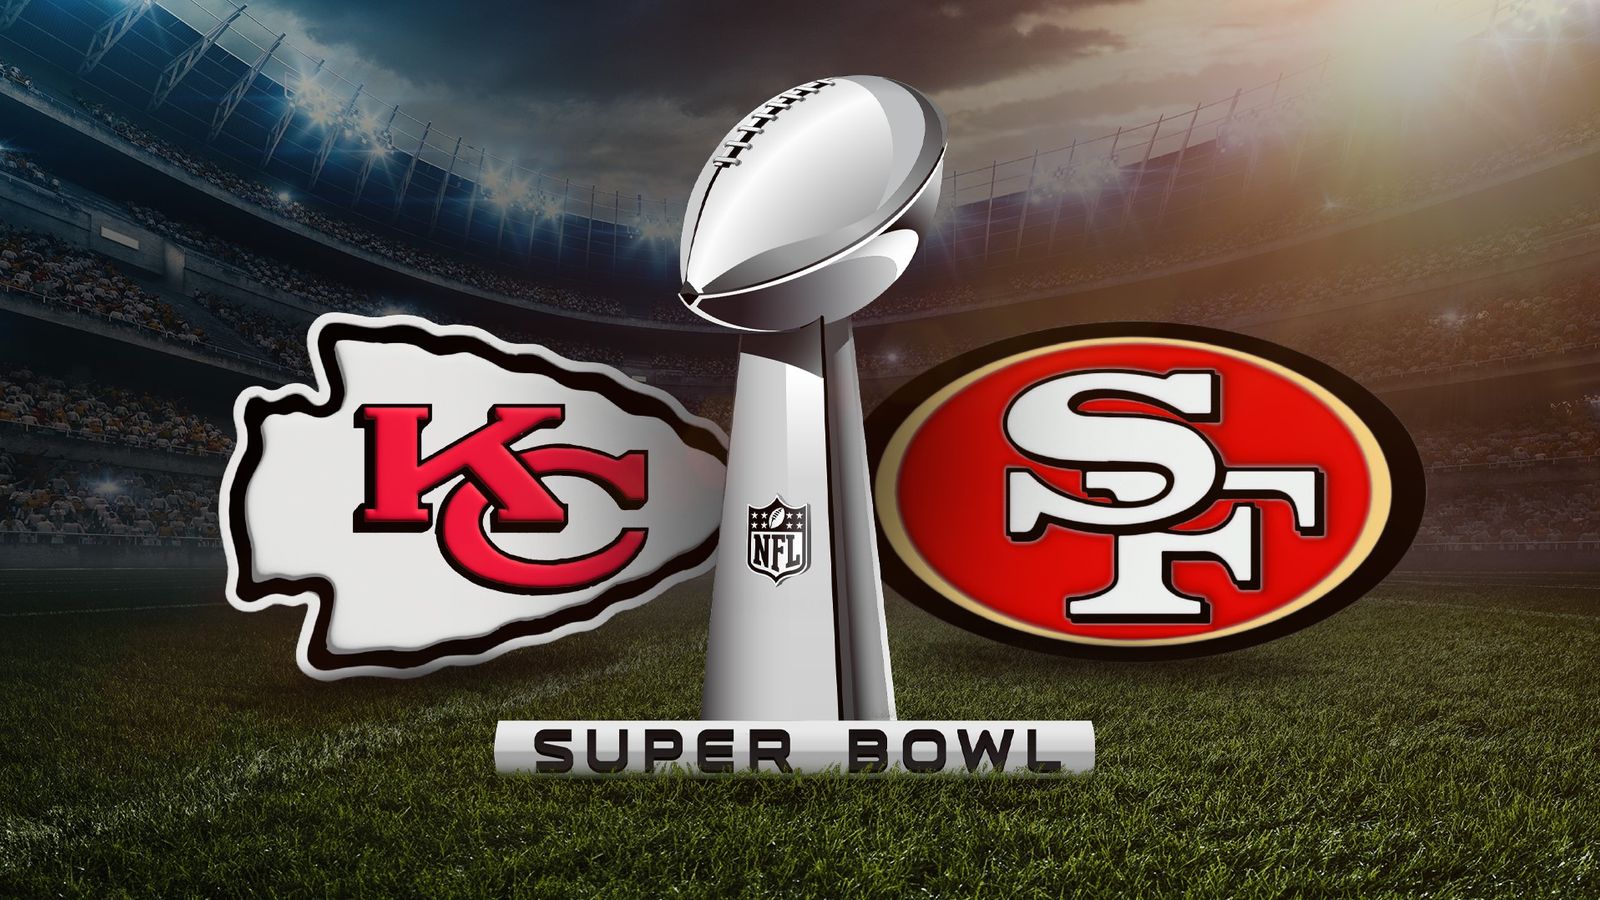 Stream Super Bowl Live Online Image to u